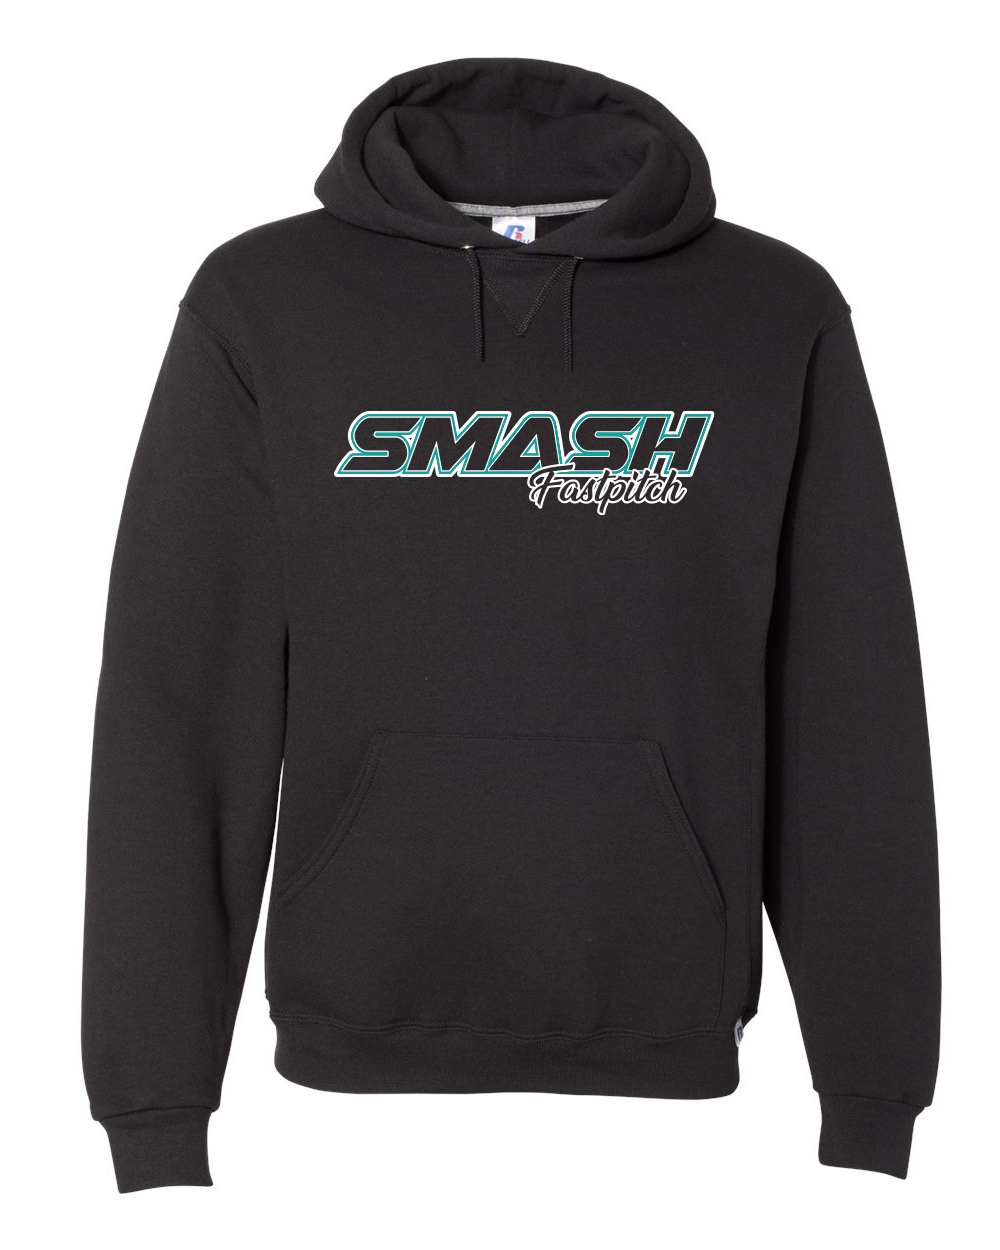 SMASH Russell Athletic Dri-Power Hooded Sweatshirt